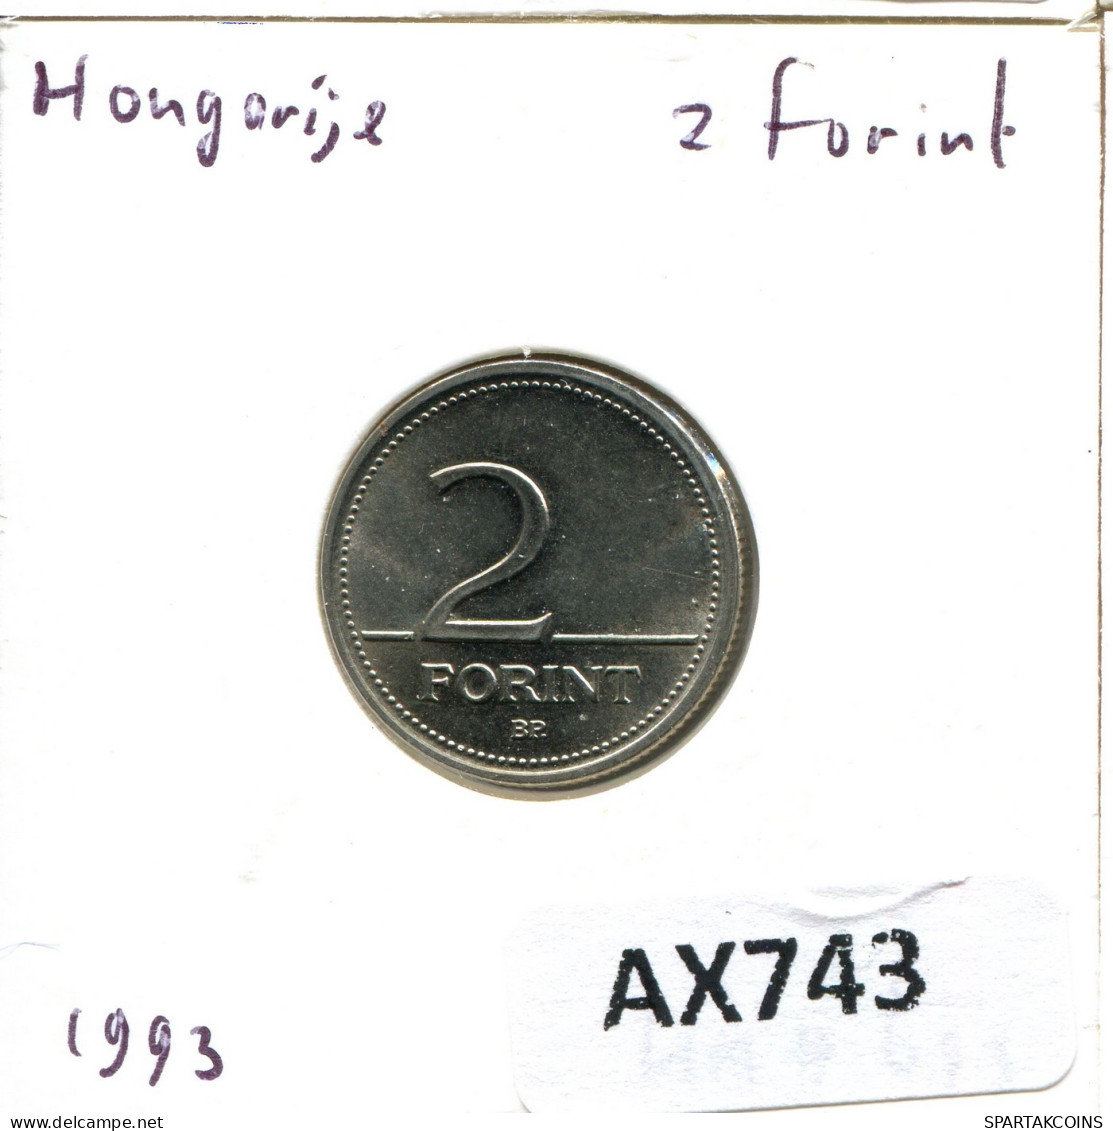 2 FORINT 1993 HUNGARY Coin #AX743.U.A - Hungary